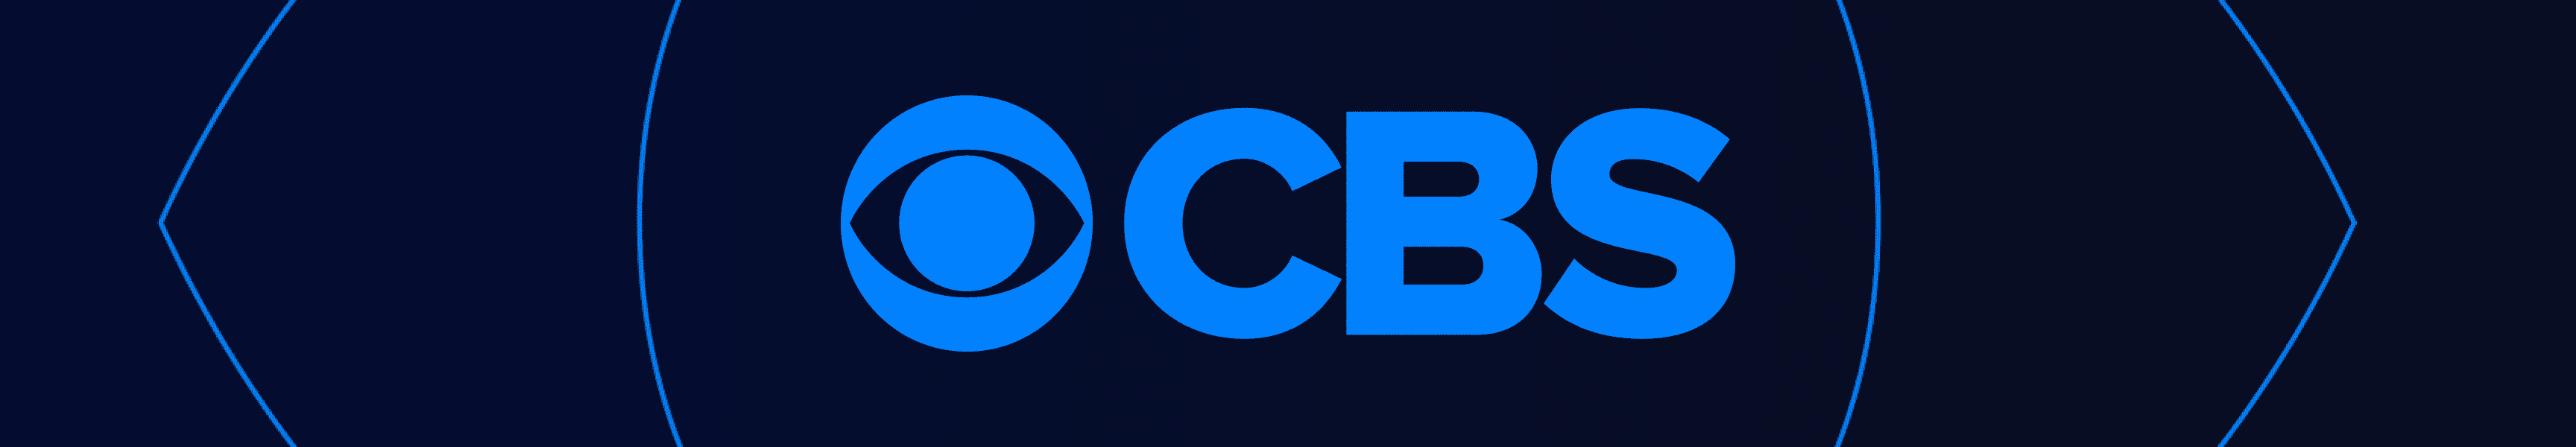 CBS Entertainment Blankets